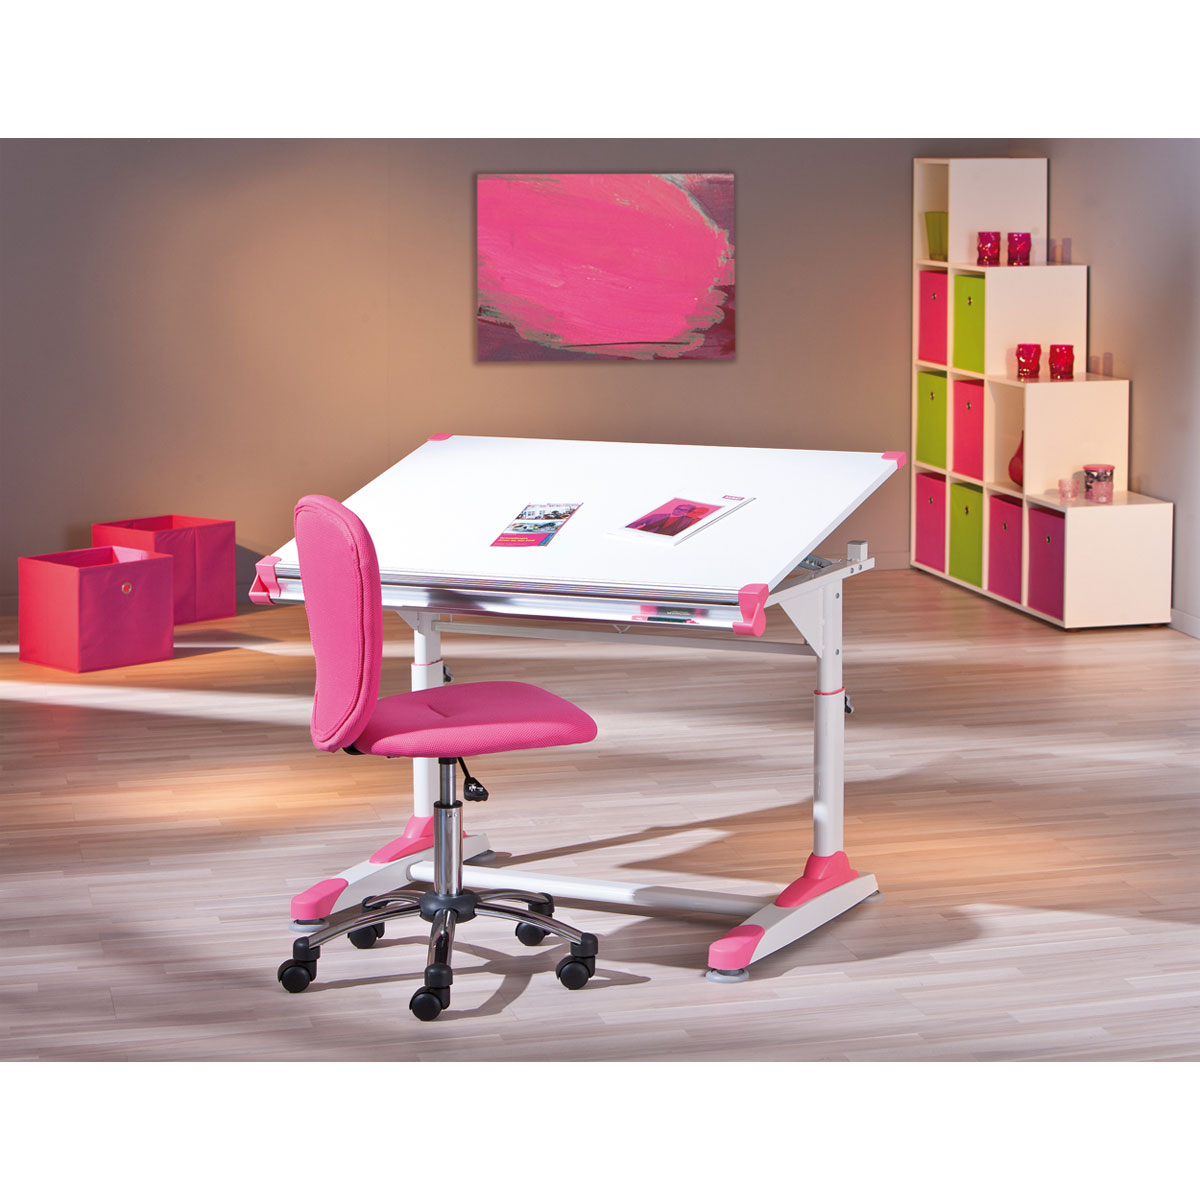 Inter Link Schüler-Schreibtisch 2 Colorido weiß Pink-Grün 100 x 84 x 55 cm  | K000031454